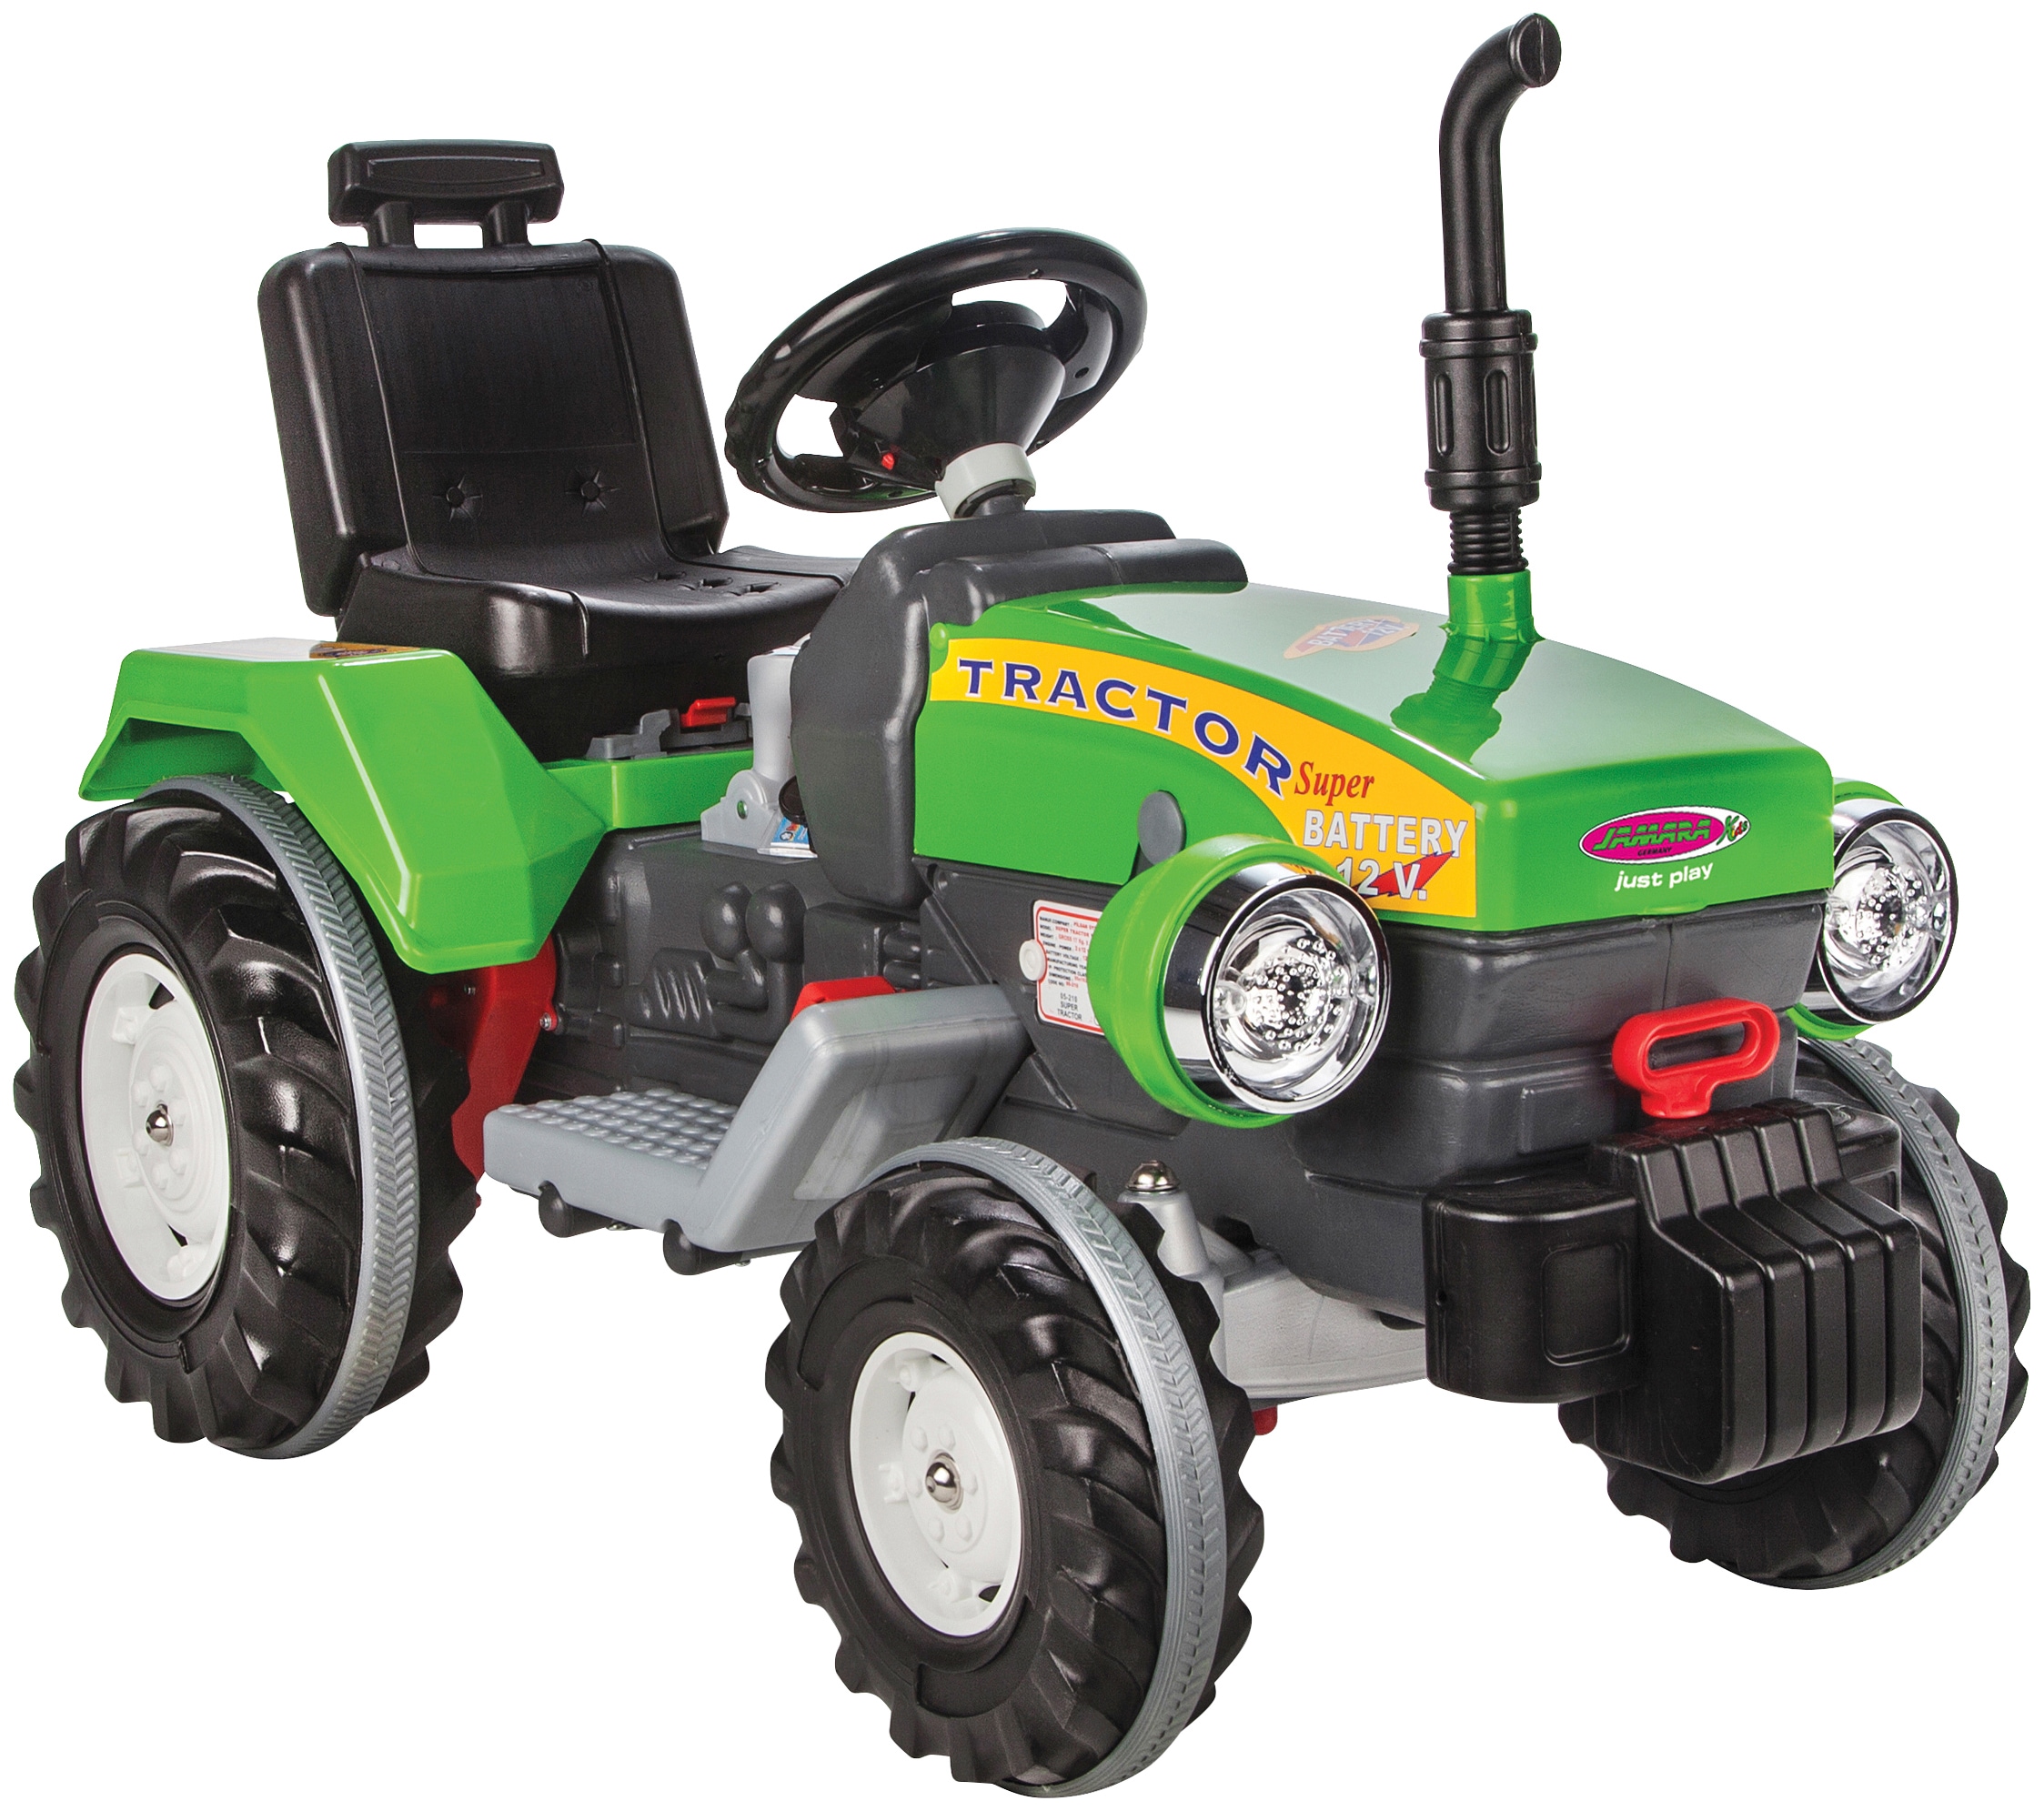 Jamara Elektro-Kinderauto »Traktor Power Dragl«, ab 3 Jahren, bis 35 kg